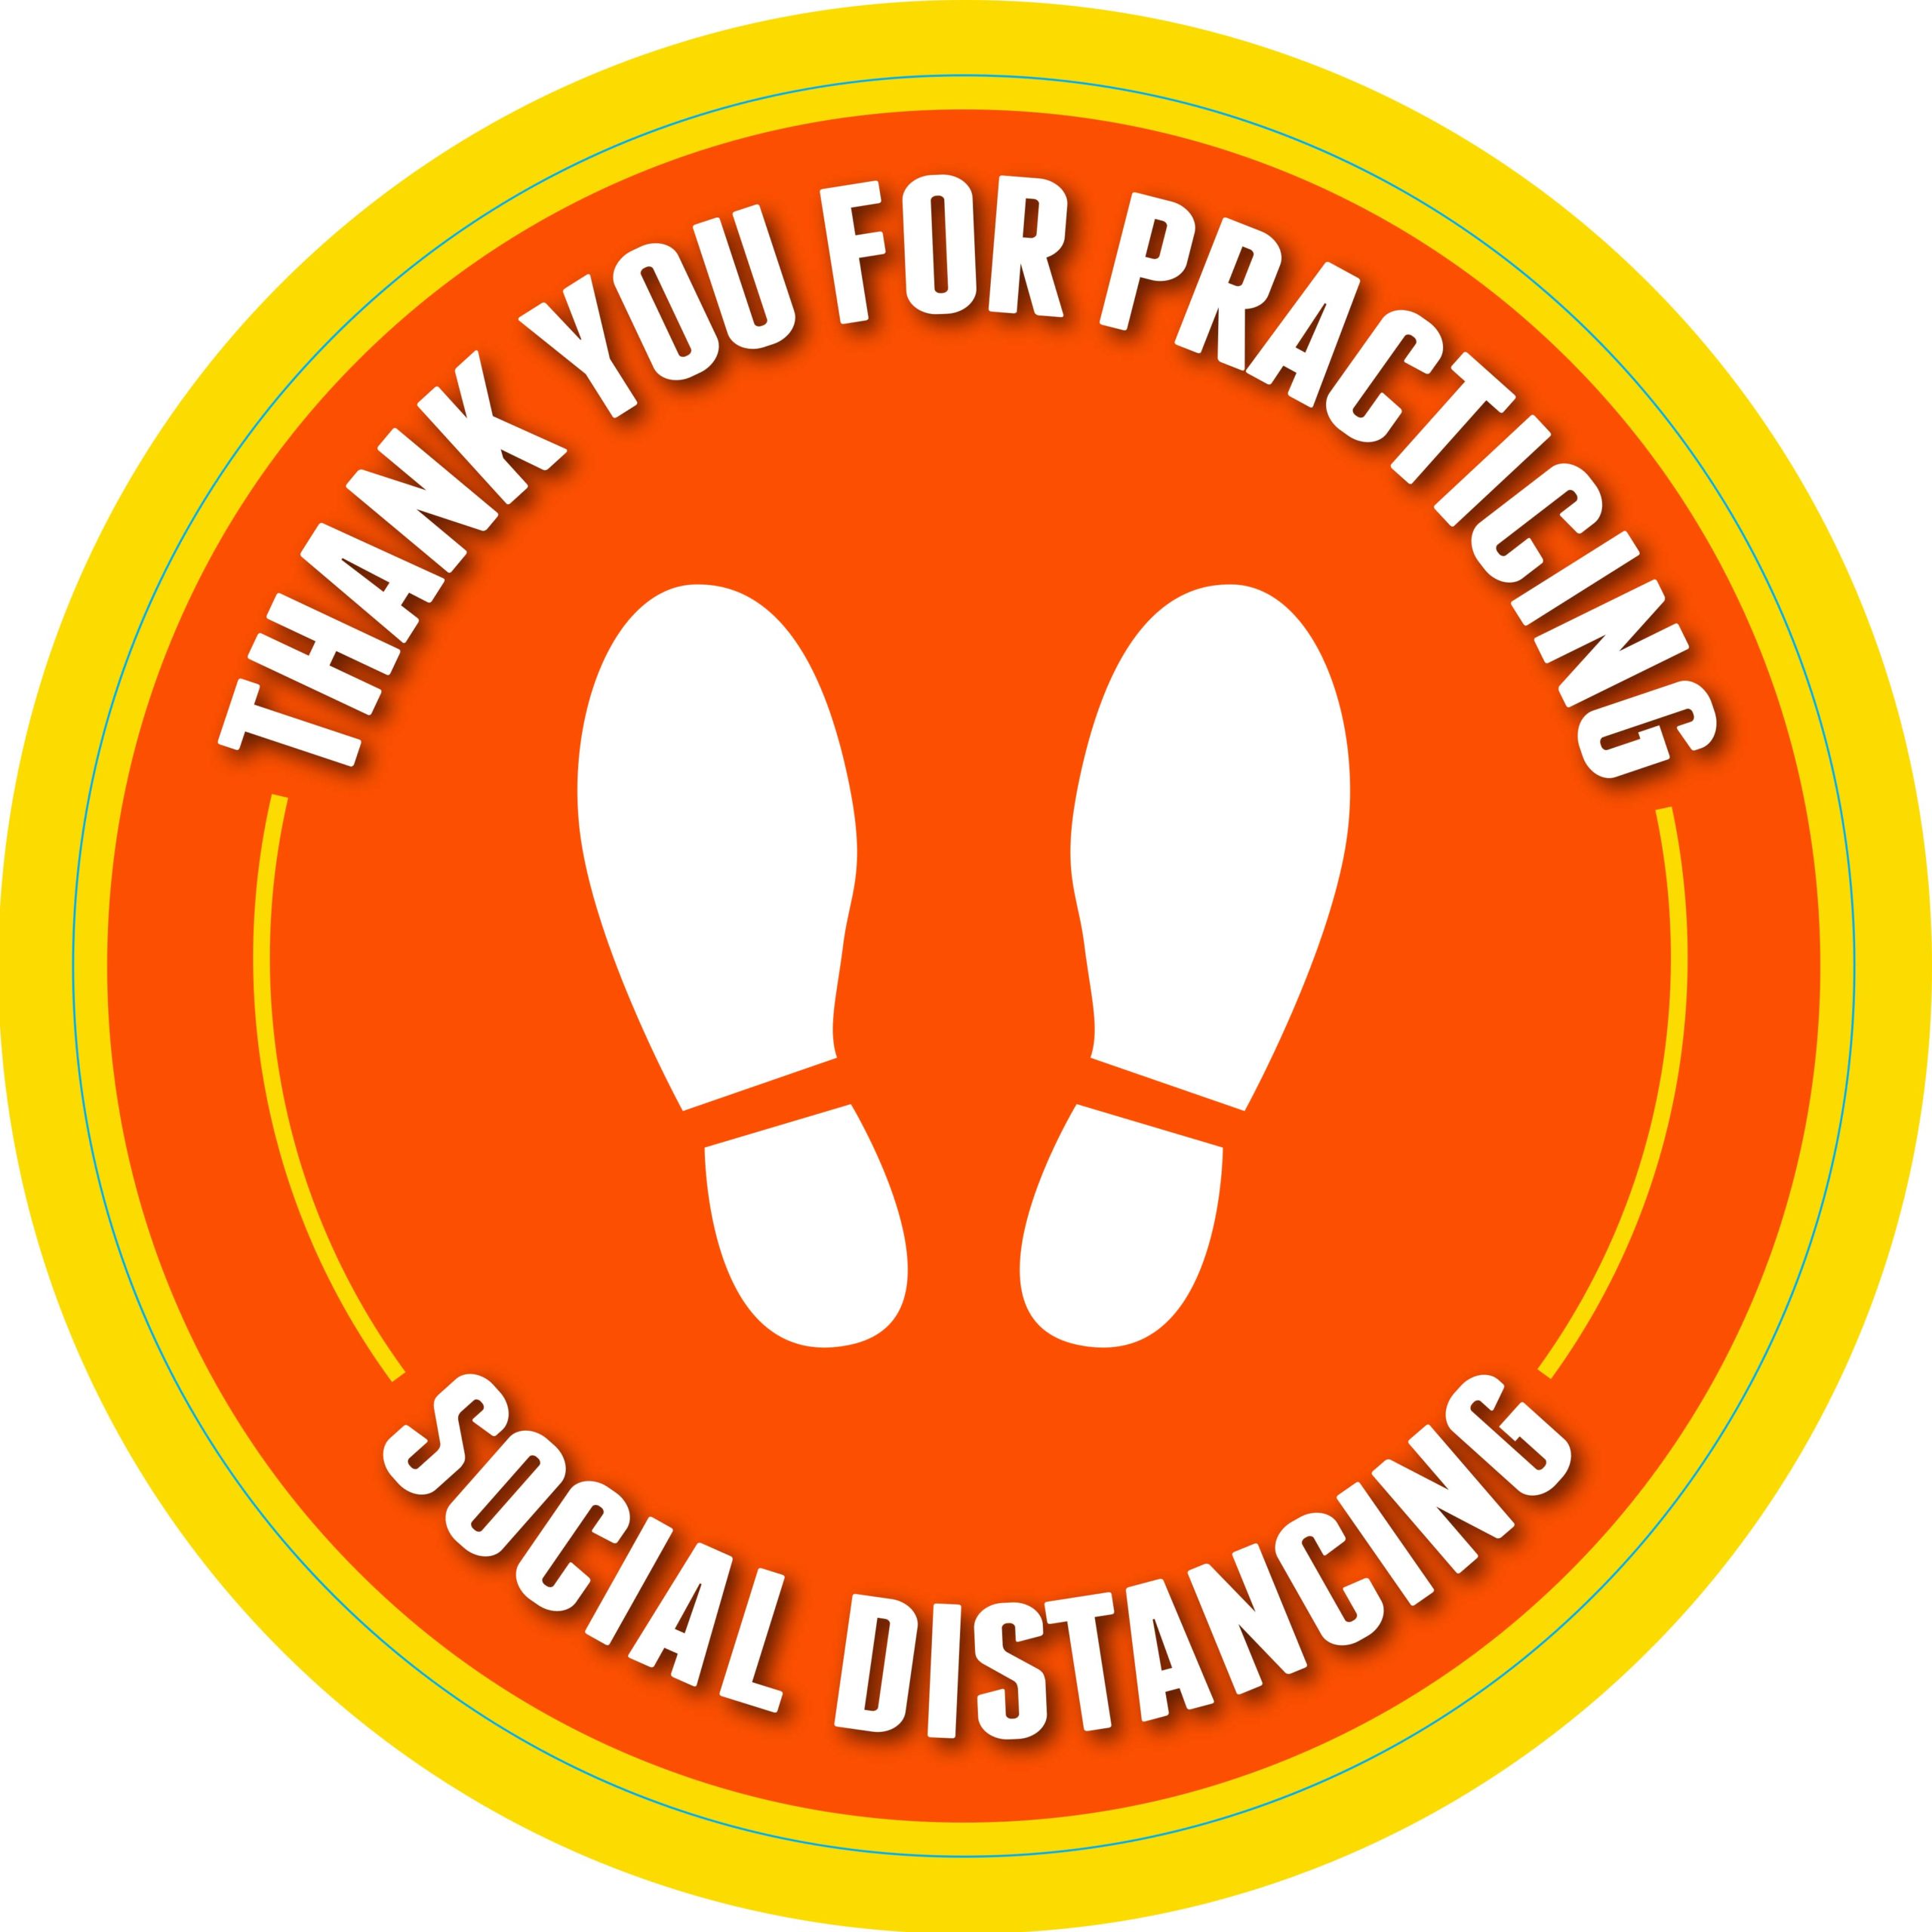 SOA - Social Distancing Floor 12" Diameter - ORANGE - 4 pack